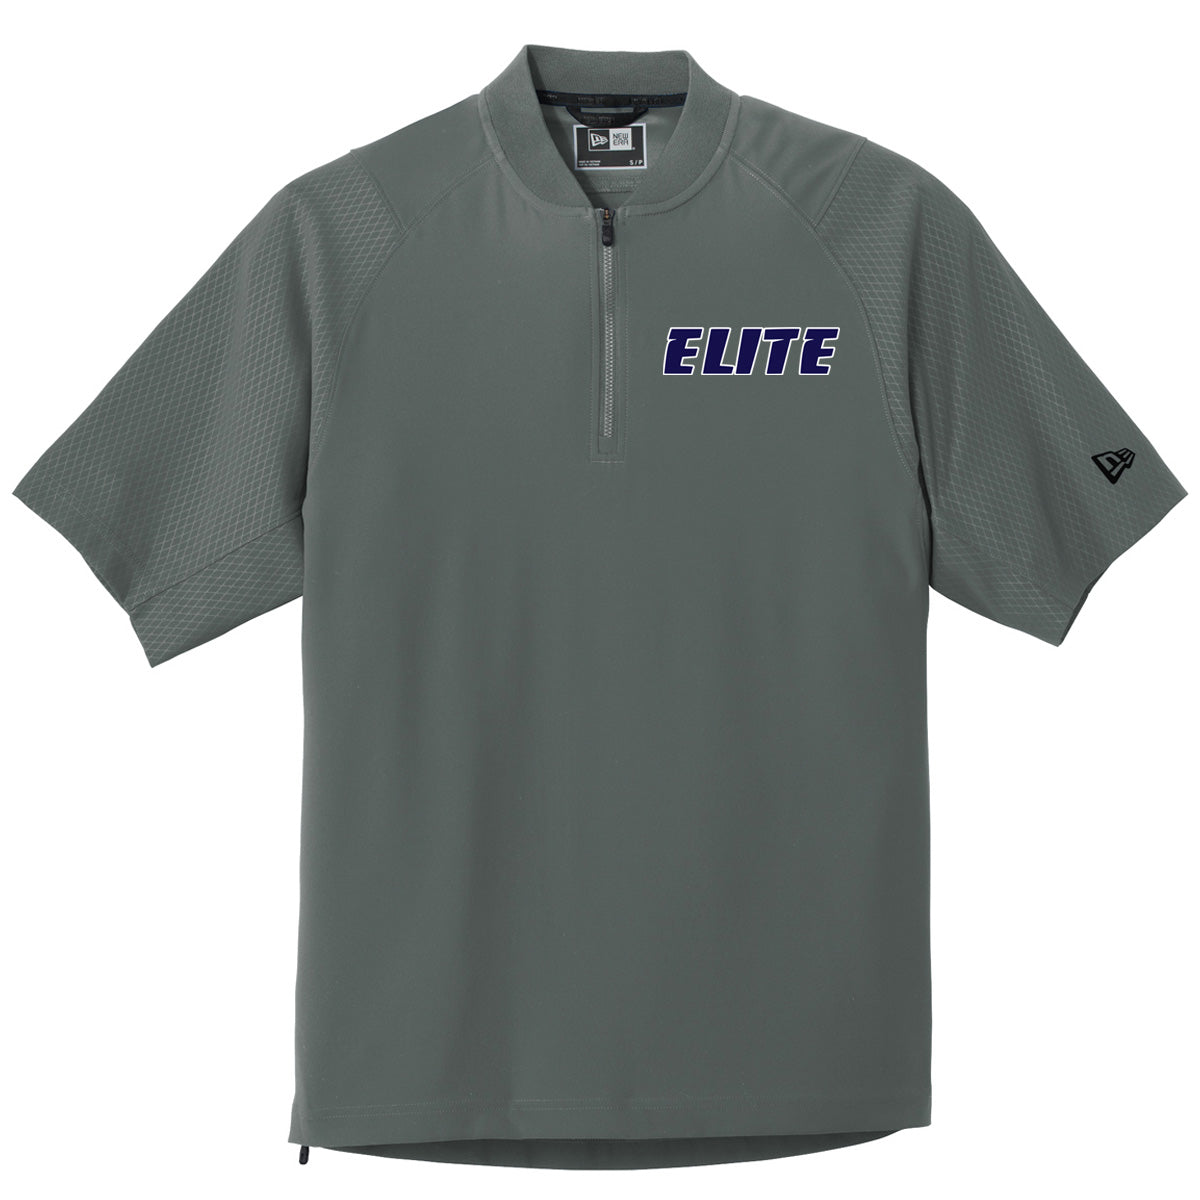 Elite - New Era Cage Short Sleeve 1/4-Zip Jacket - Graphite (NEA600) - Southern Grace Creations